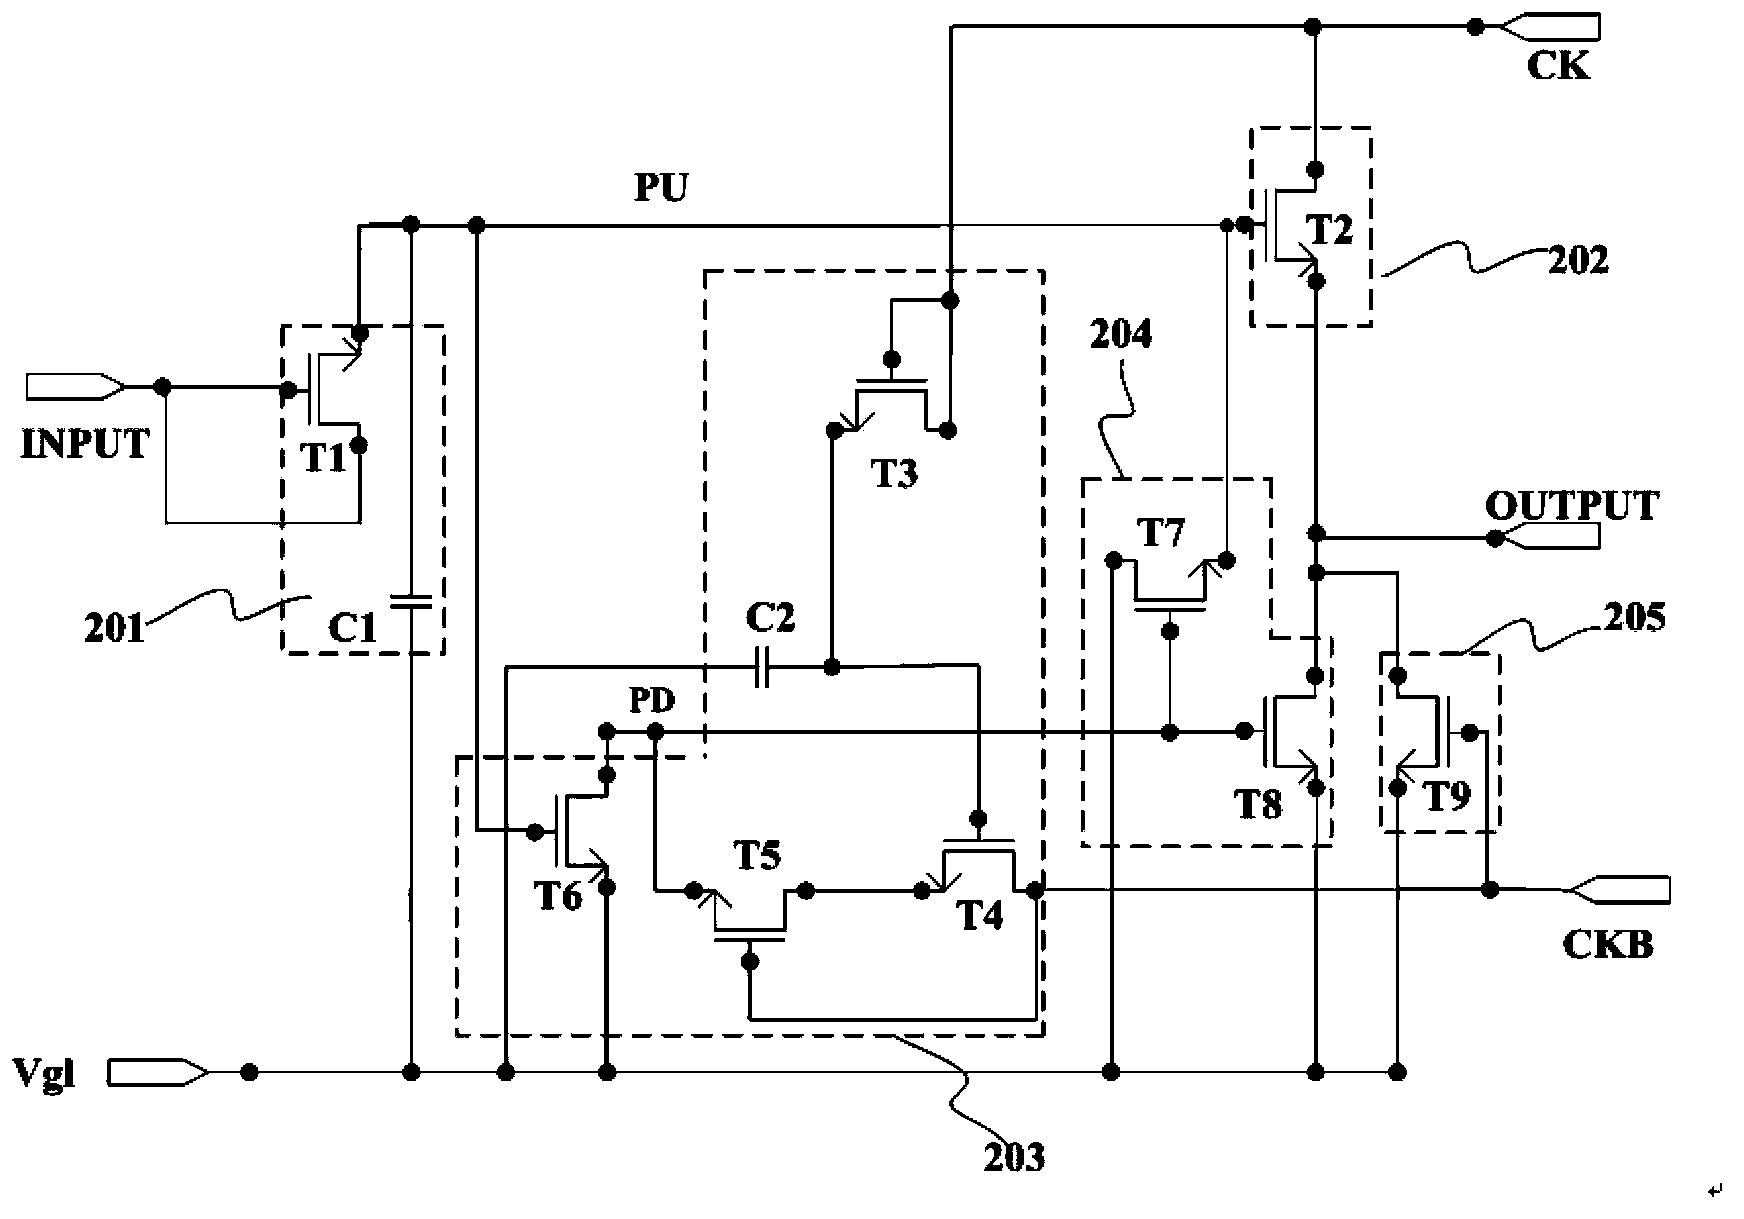 Shifting register unit, gate drive circuit and display circuit